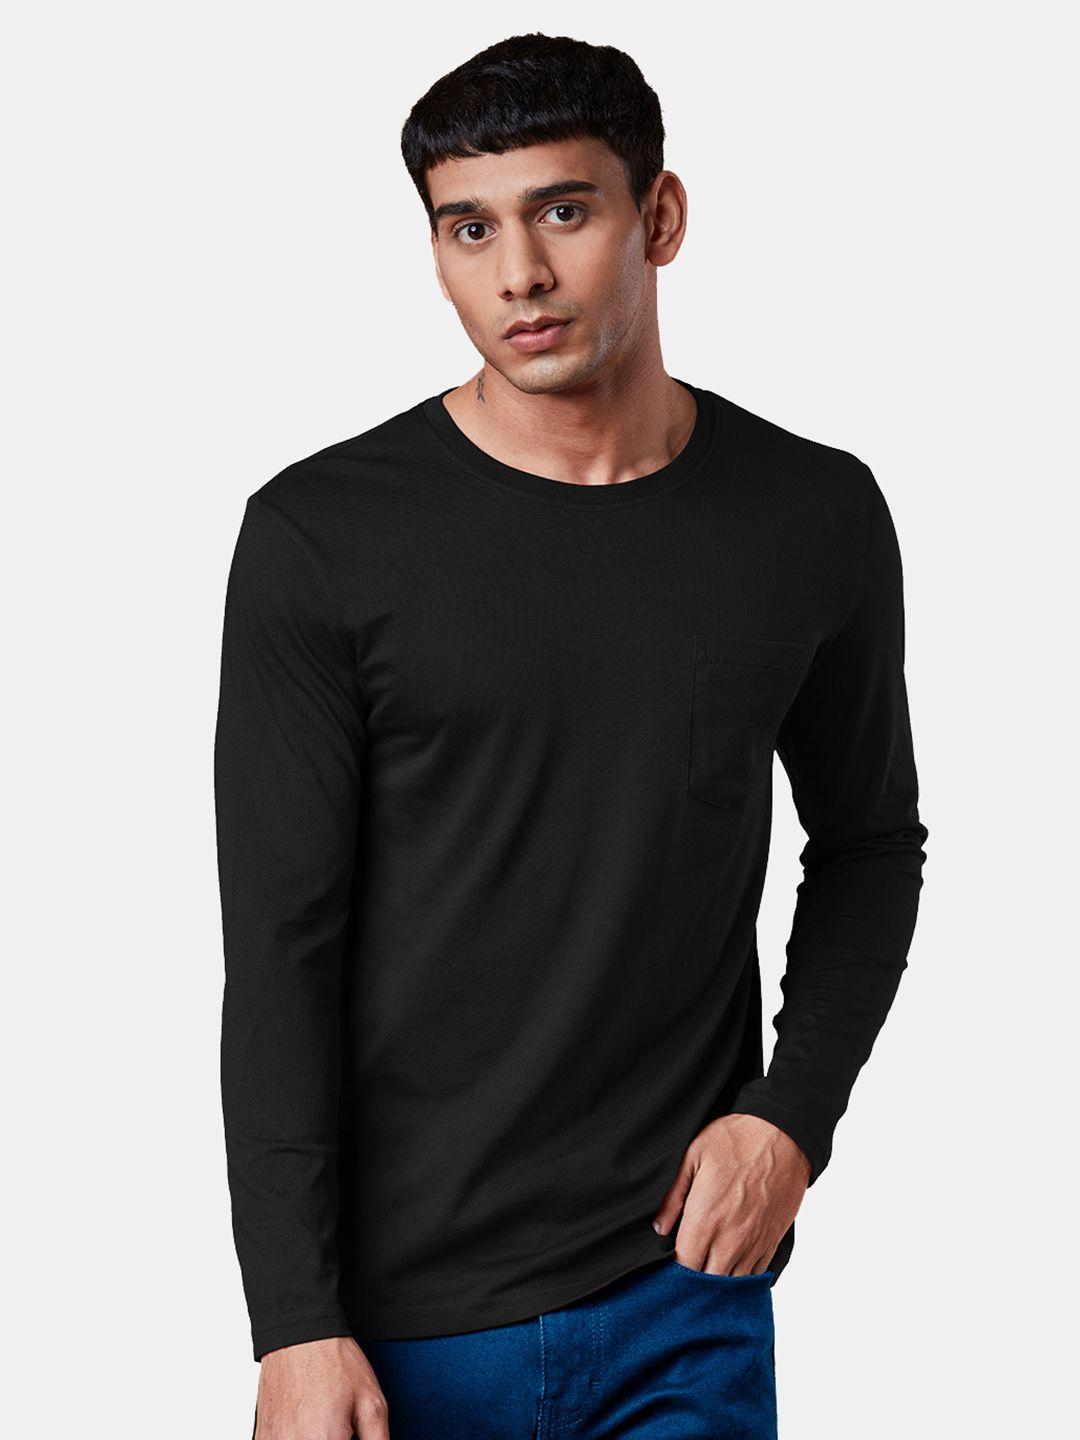 the souled store men black solid cotton t-shirt